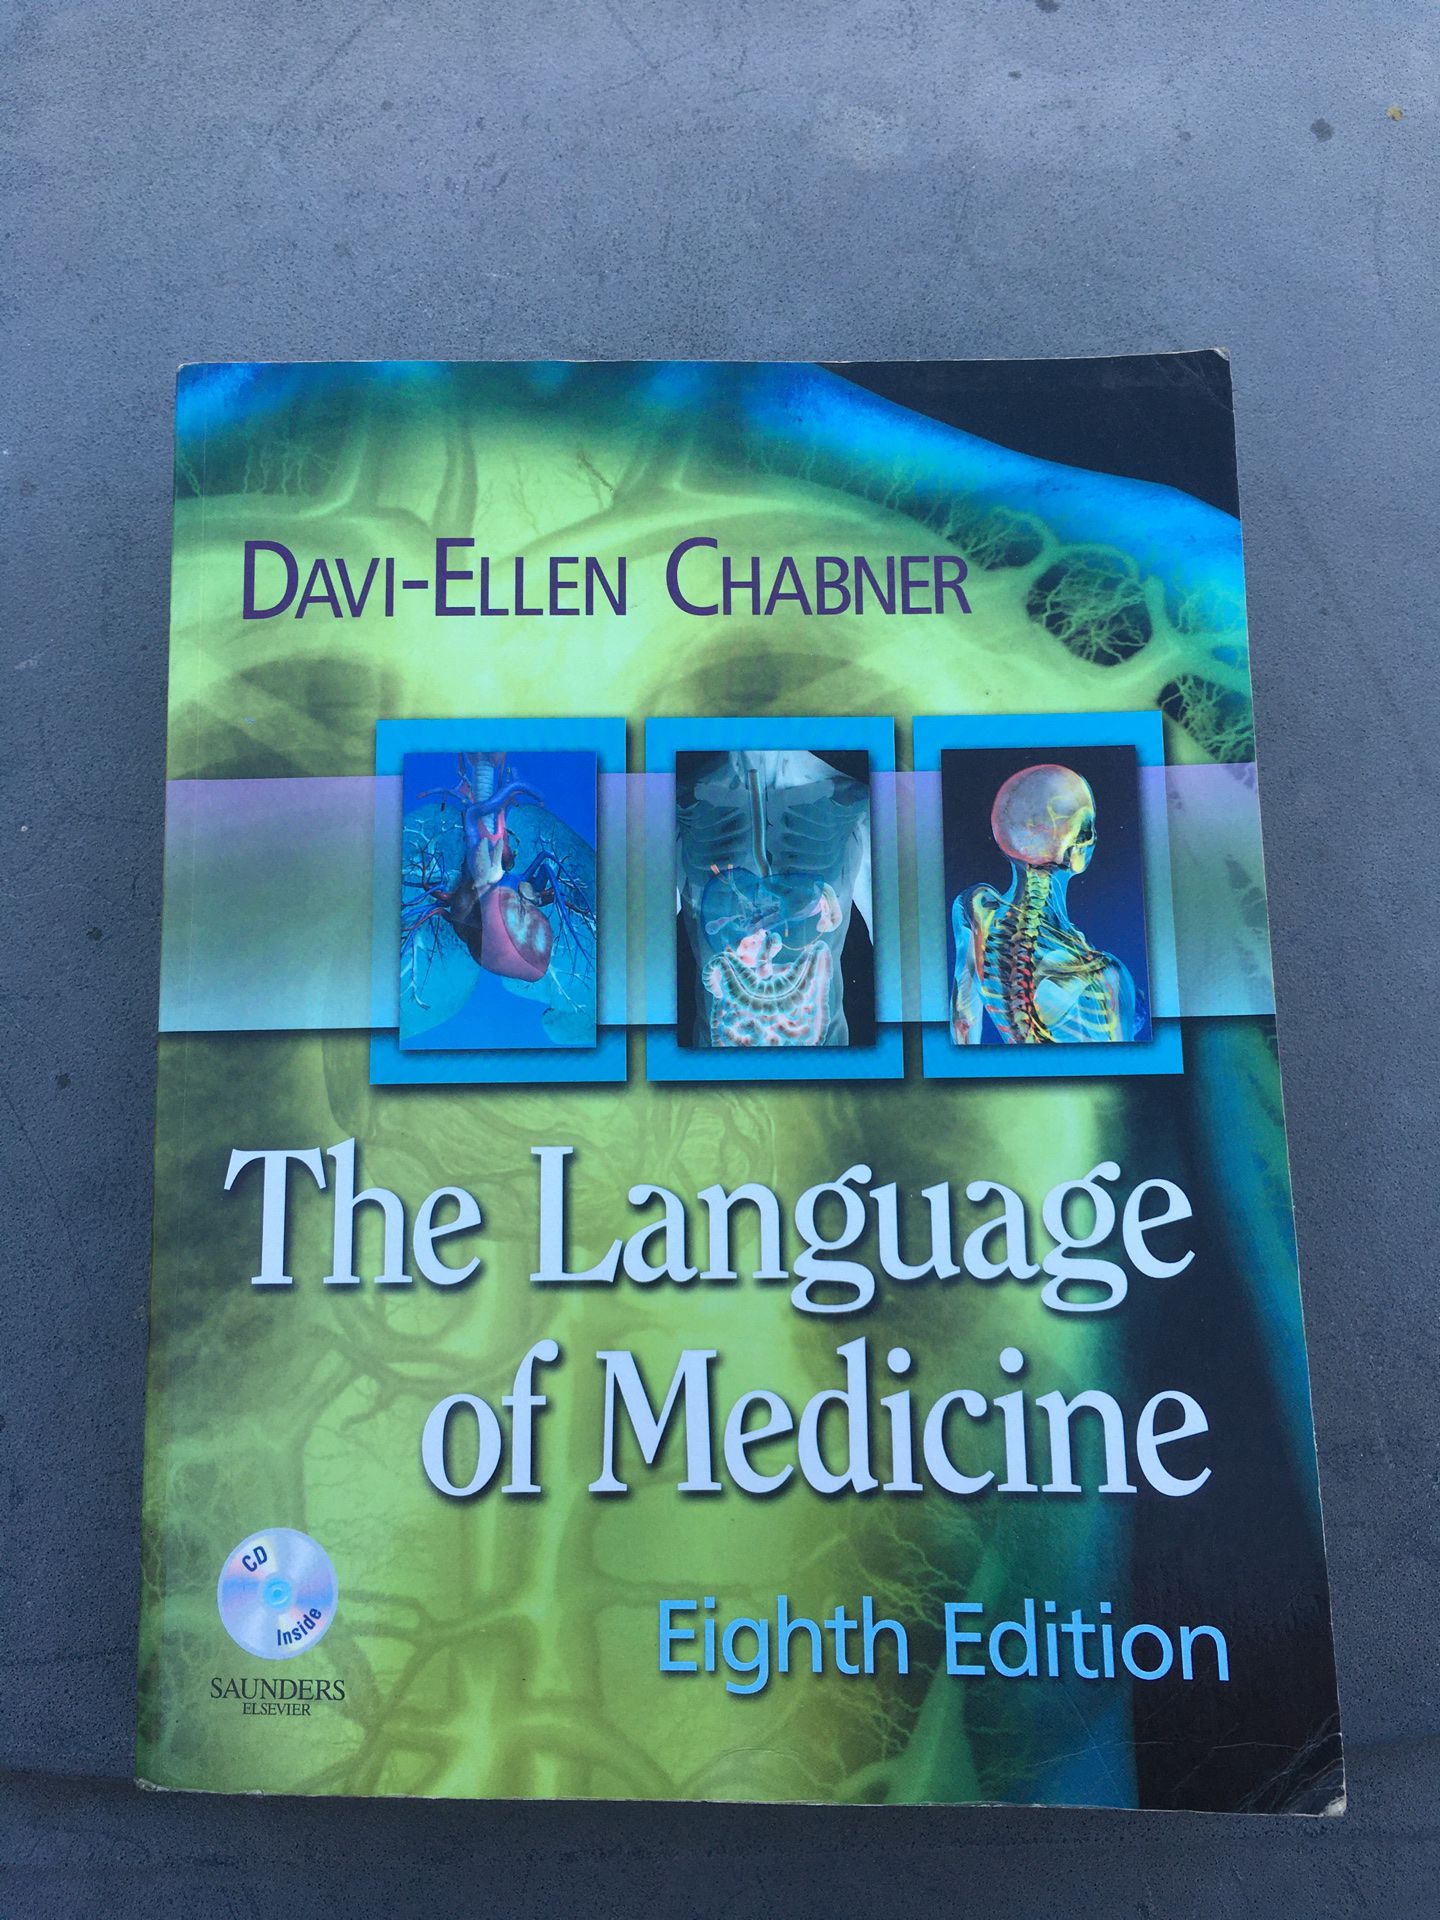 The language of medicine 8th Edition